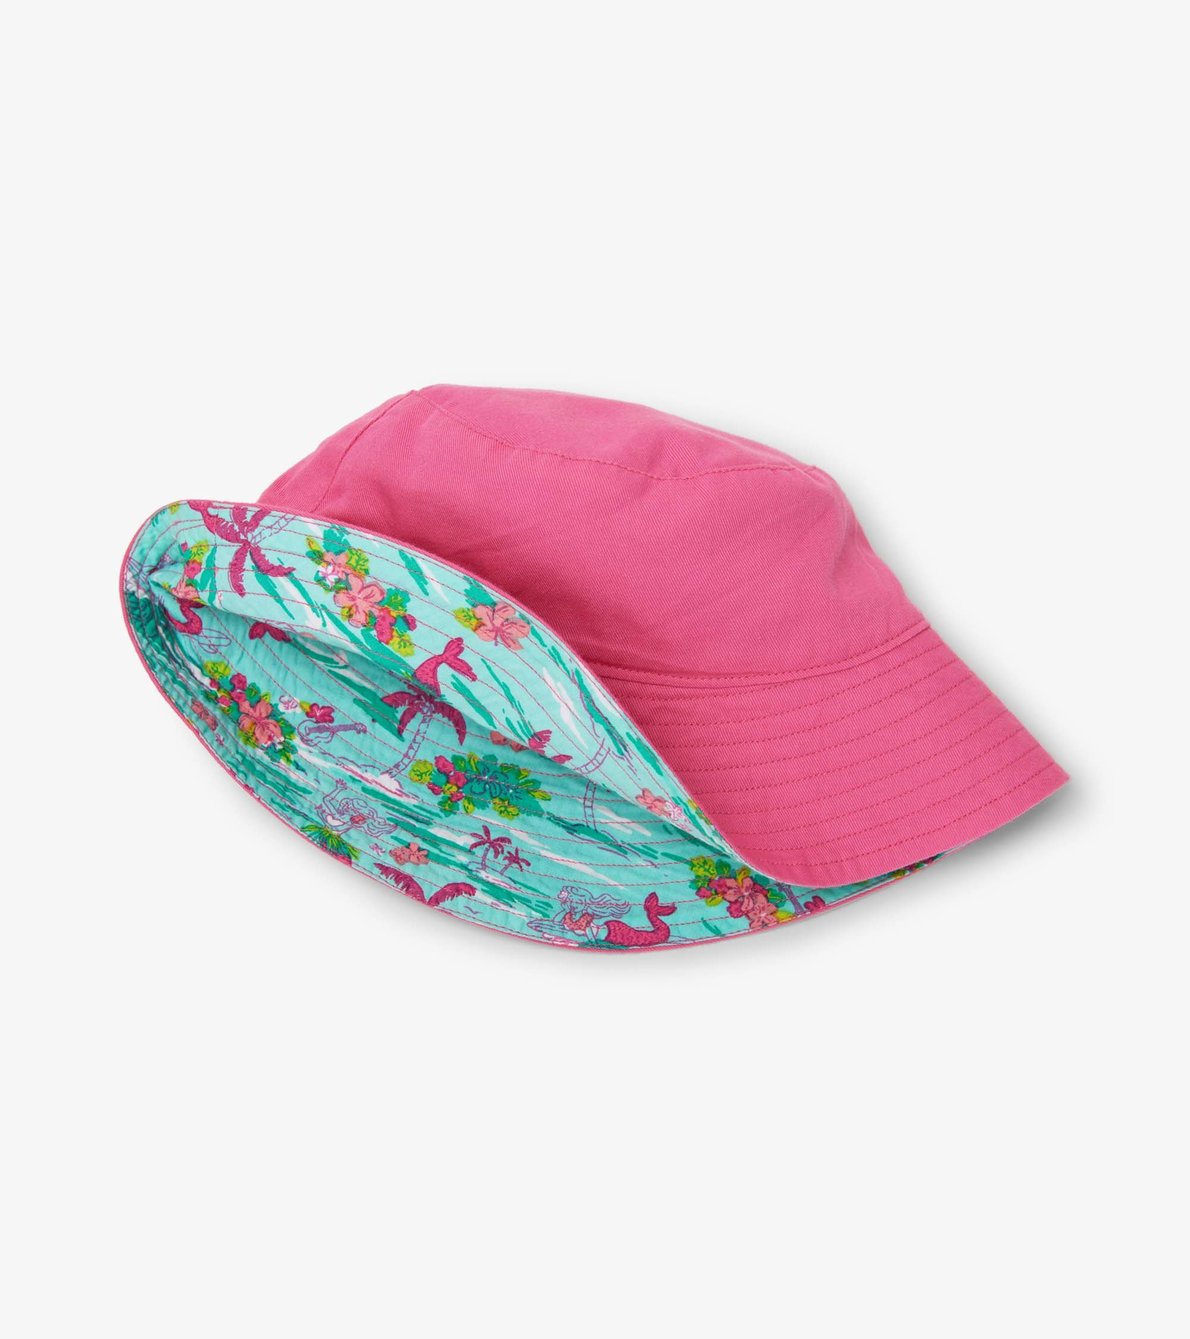 View larger image of Tropical Mermaid Reversible Sun Hat